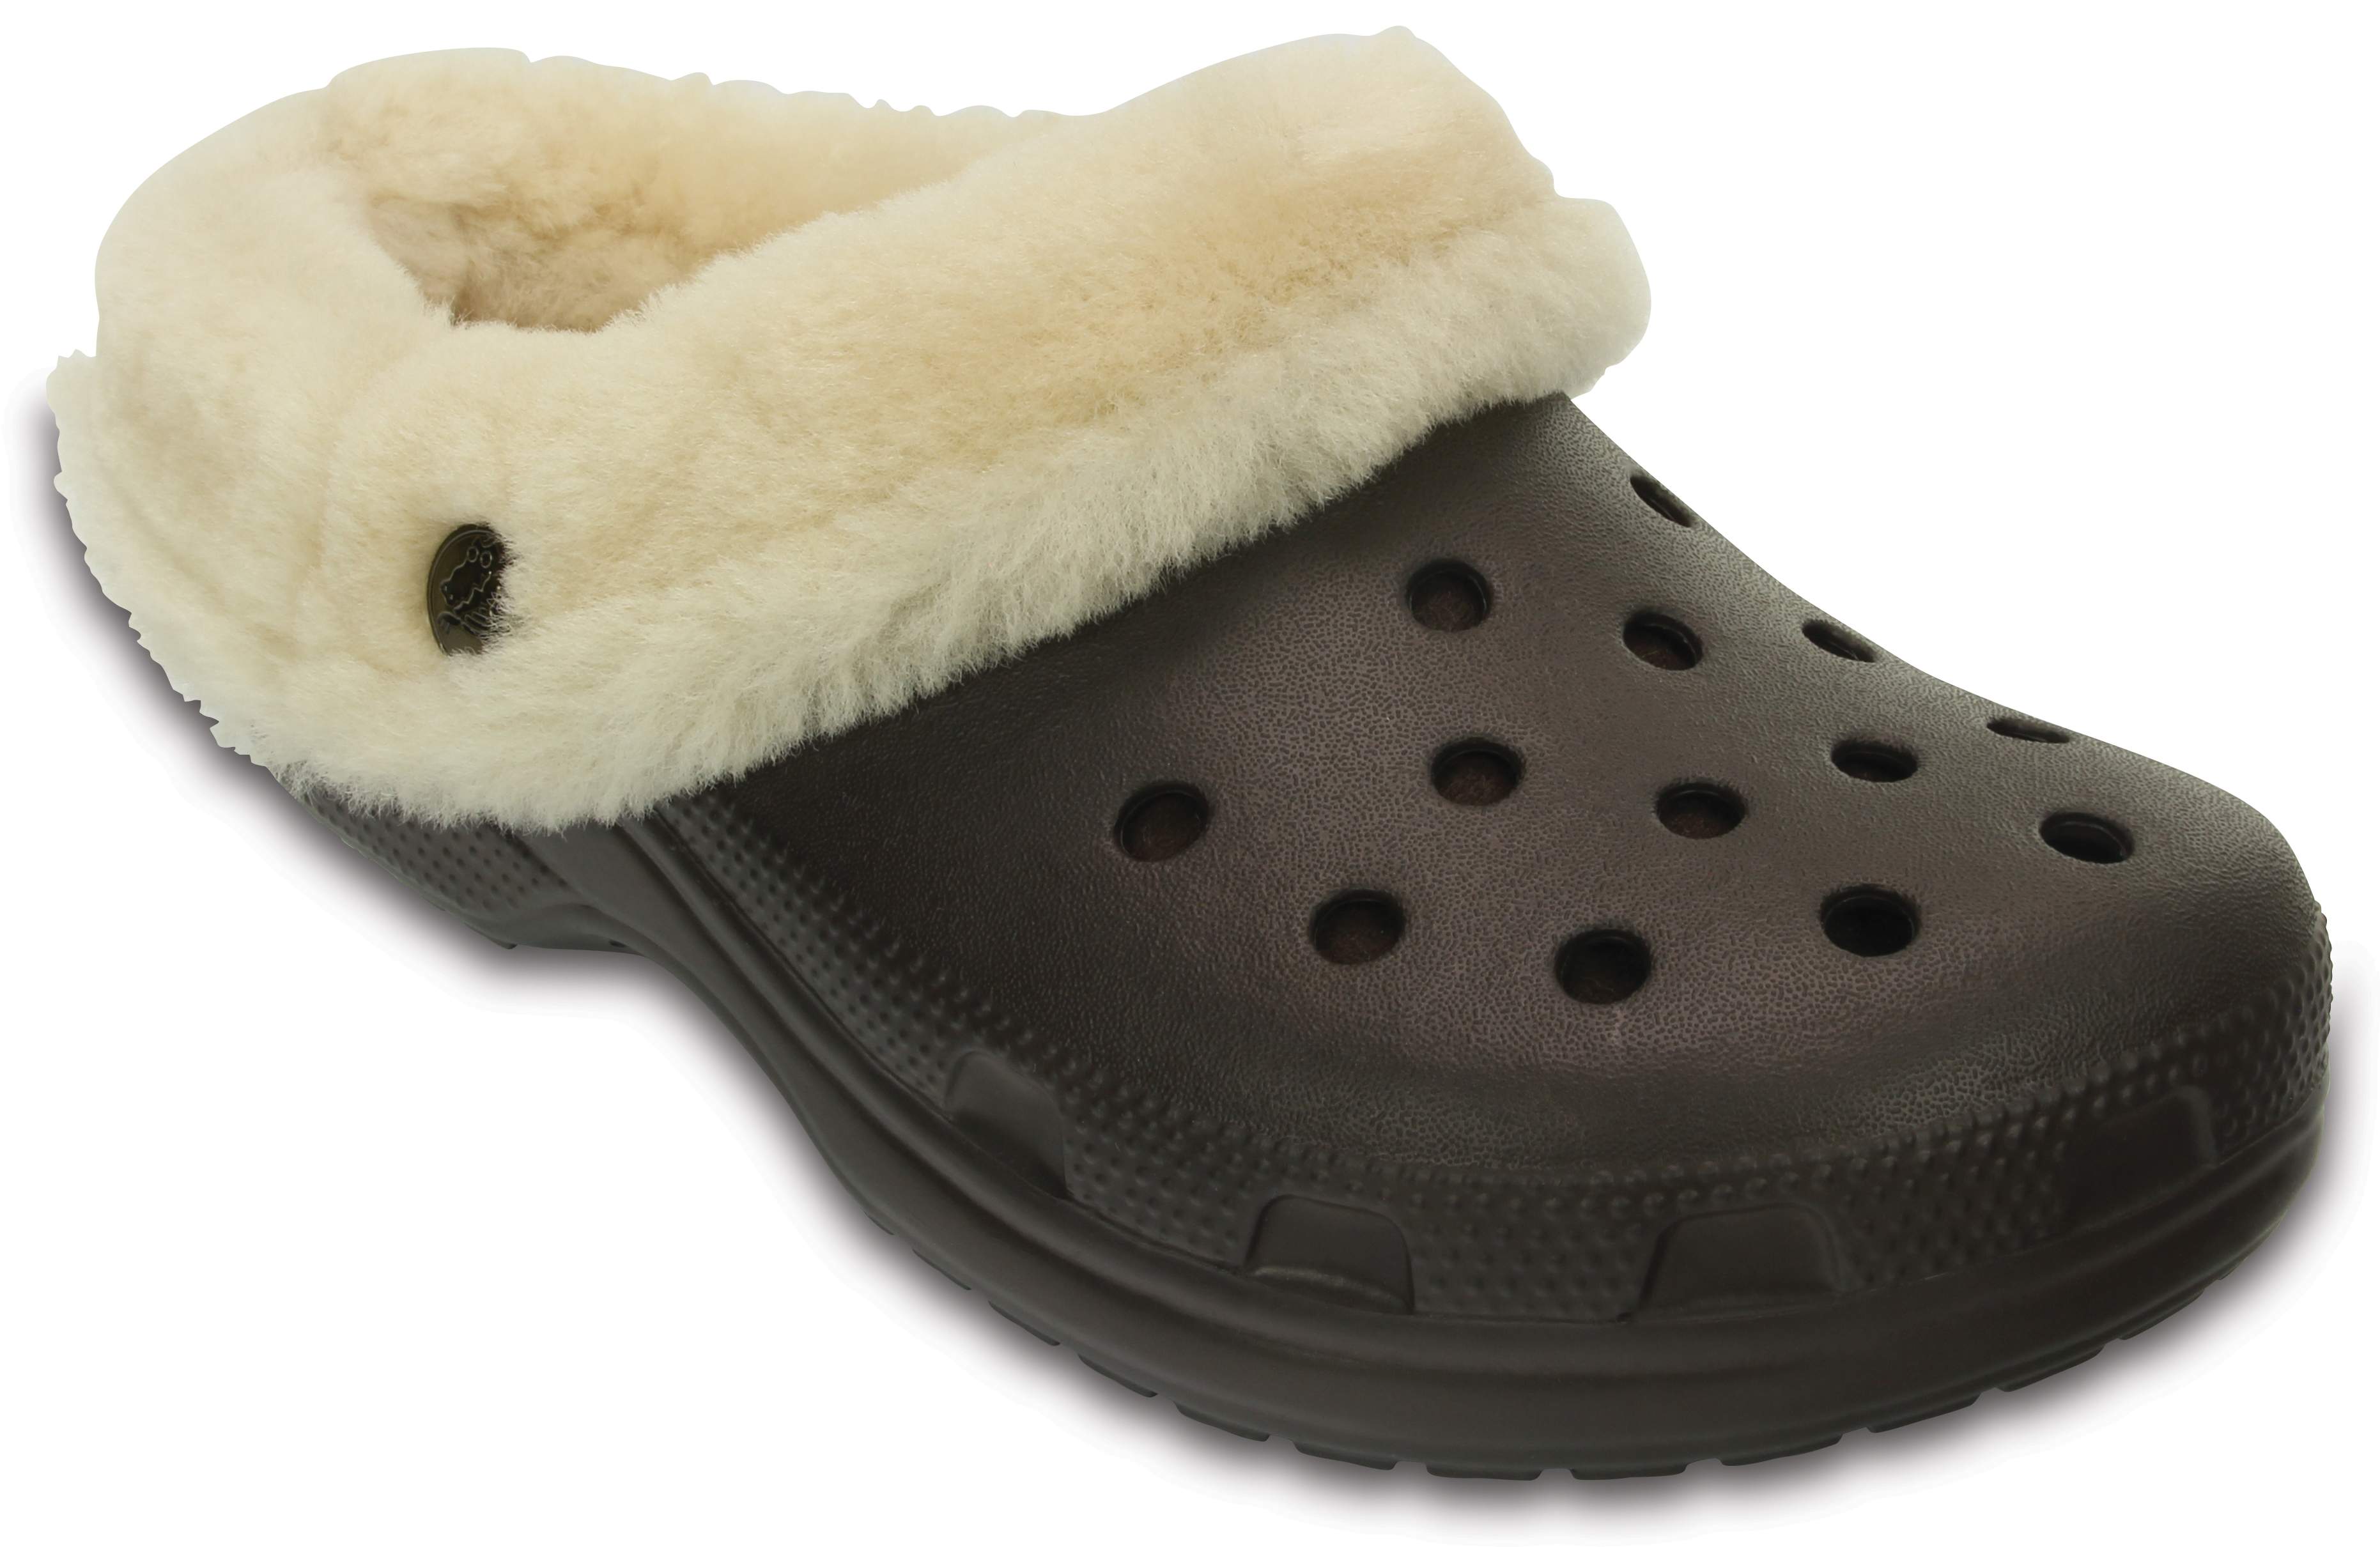 croc clogs with fur